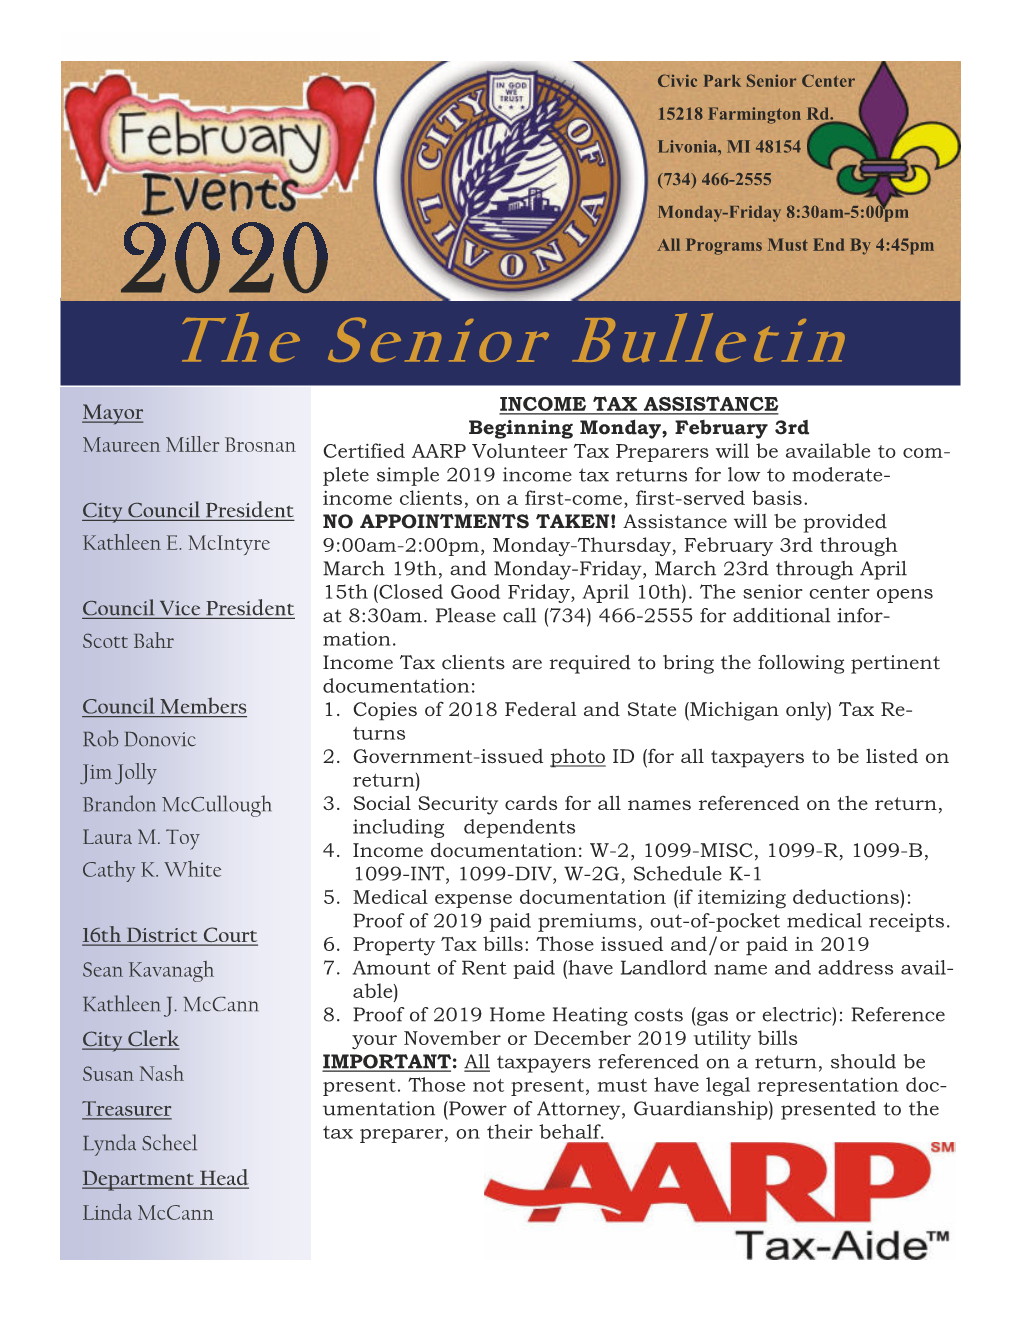 The Senior Bulletin